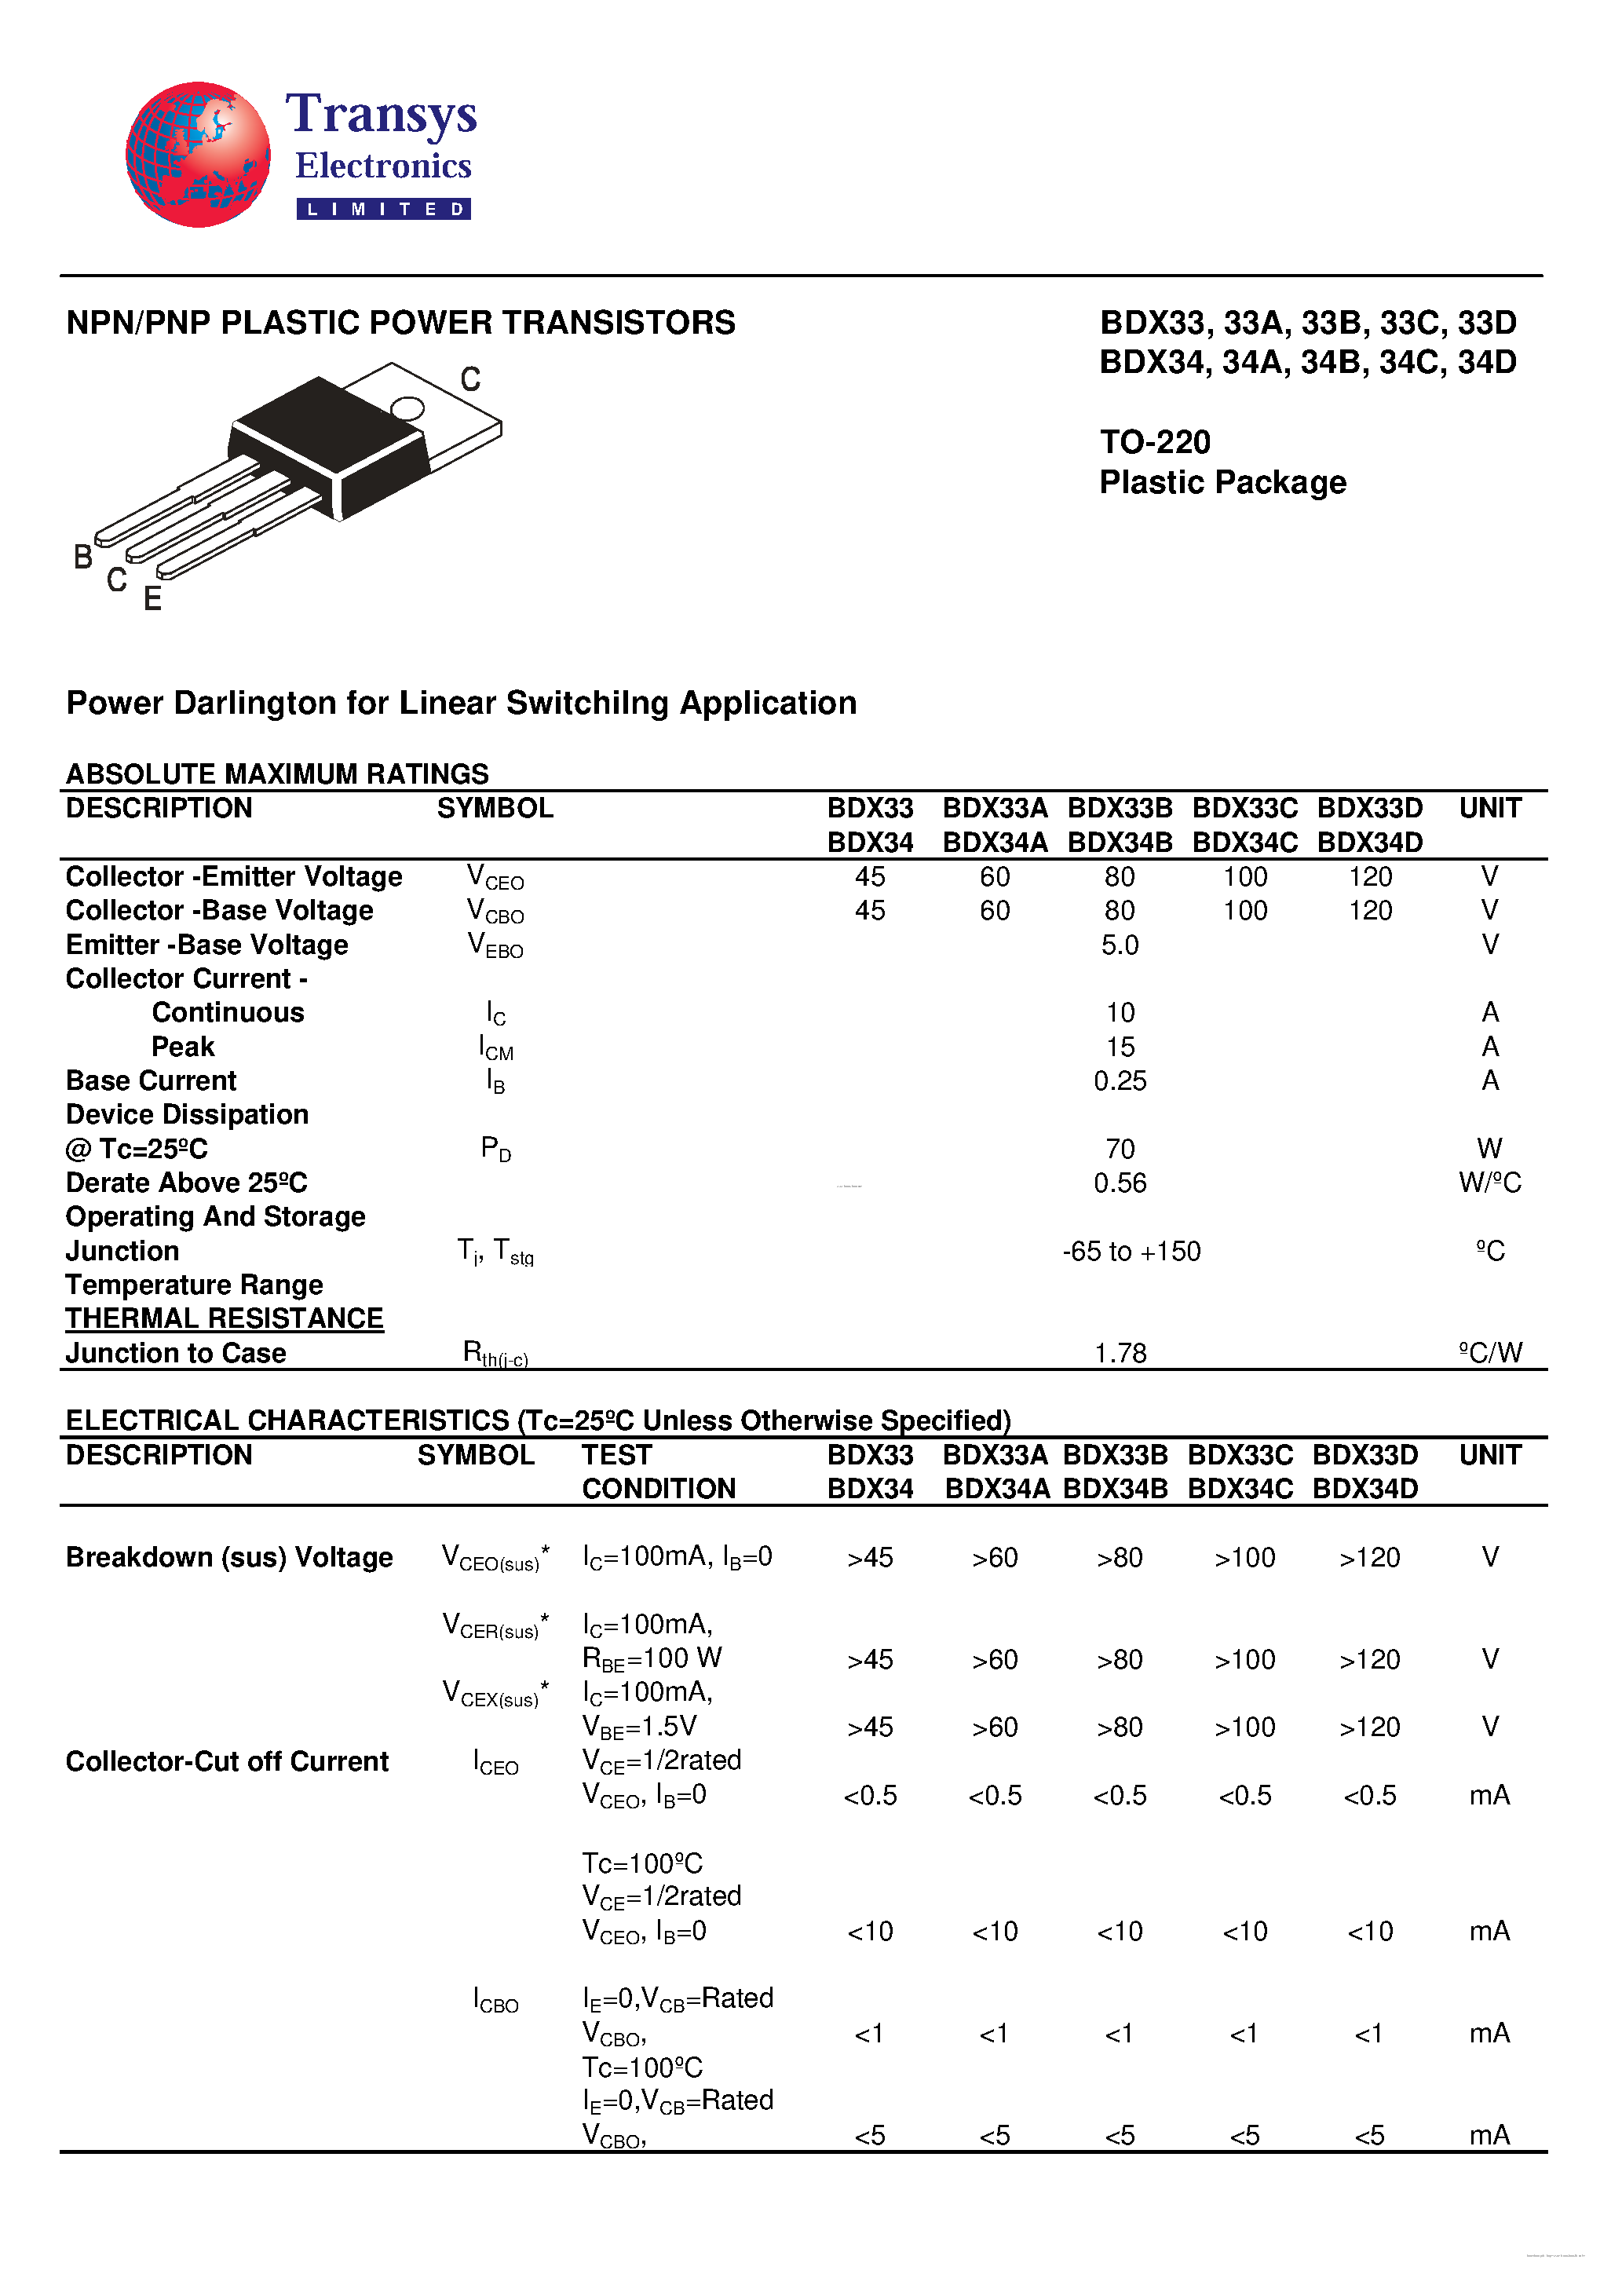 Datasheet BDX33 - (BDX33 / BDX34) NPN/PNP PLASTIC POWER TRANSISTORS page 1